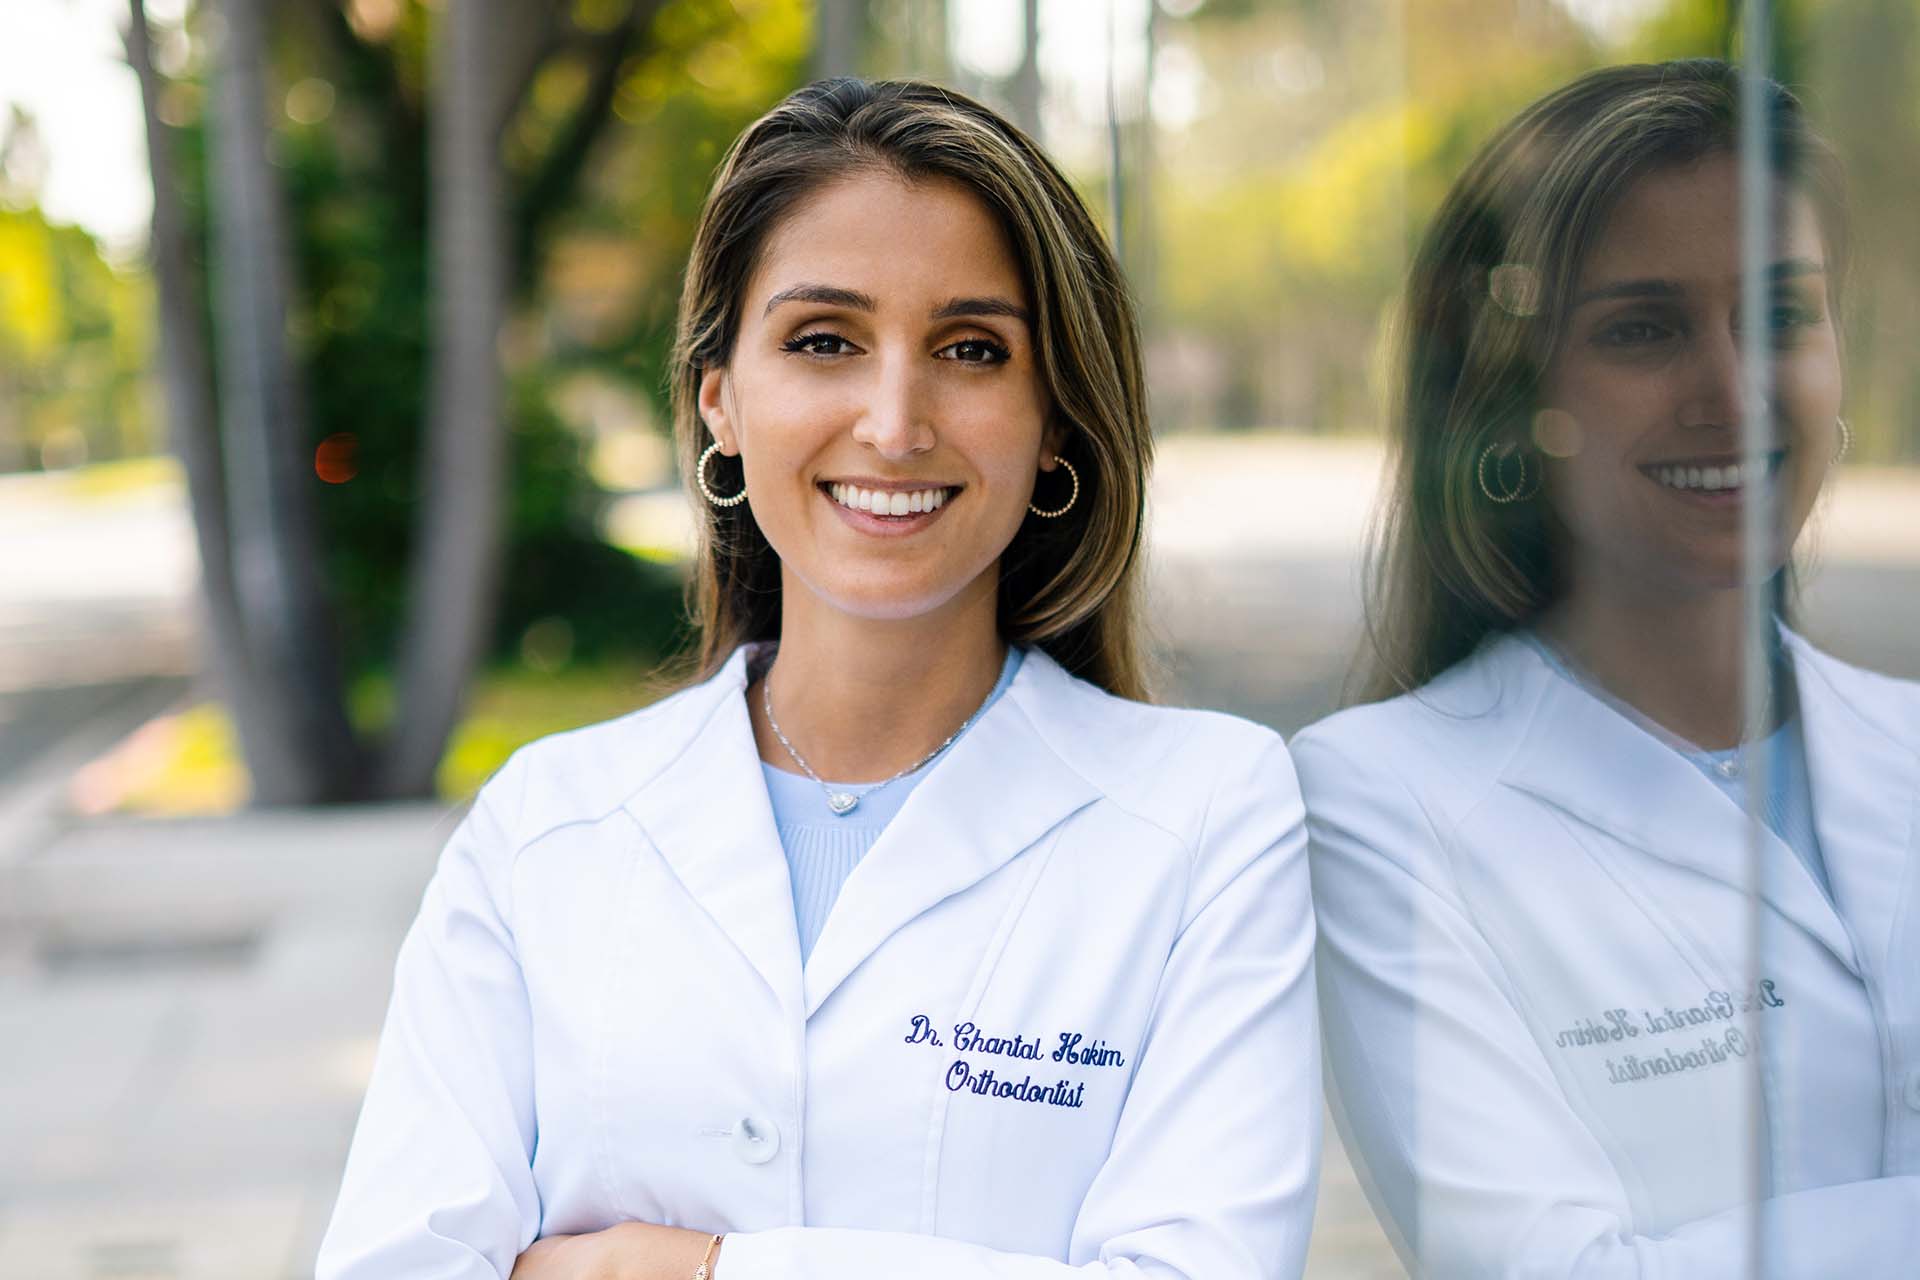 Dr Chantal Hakim of the Orthospaceship - Hakim Orthodontics serving Silver Lake, Los Angeles